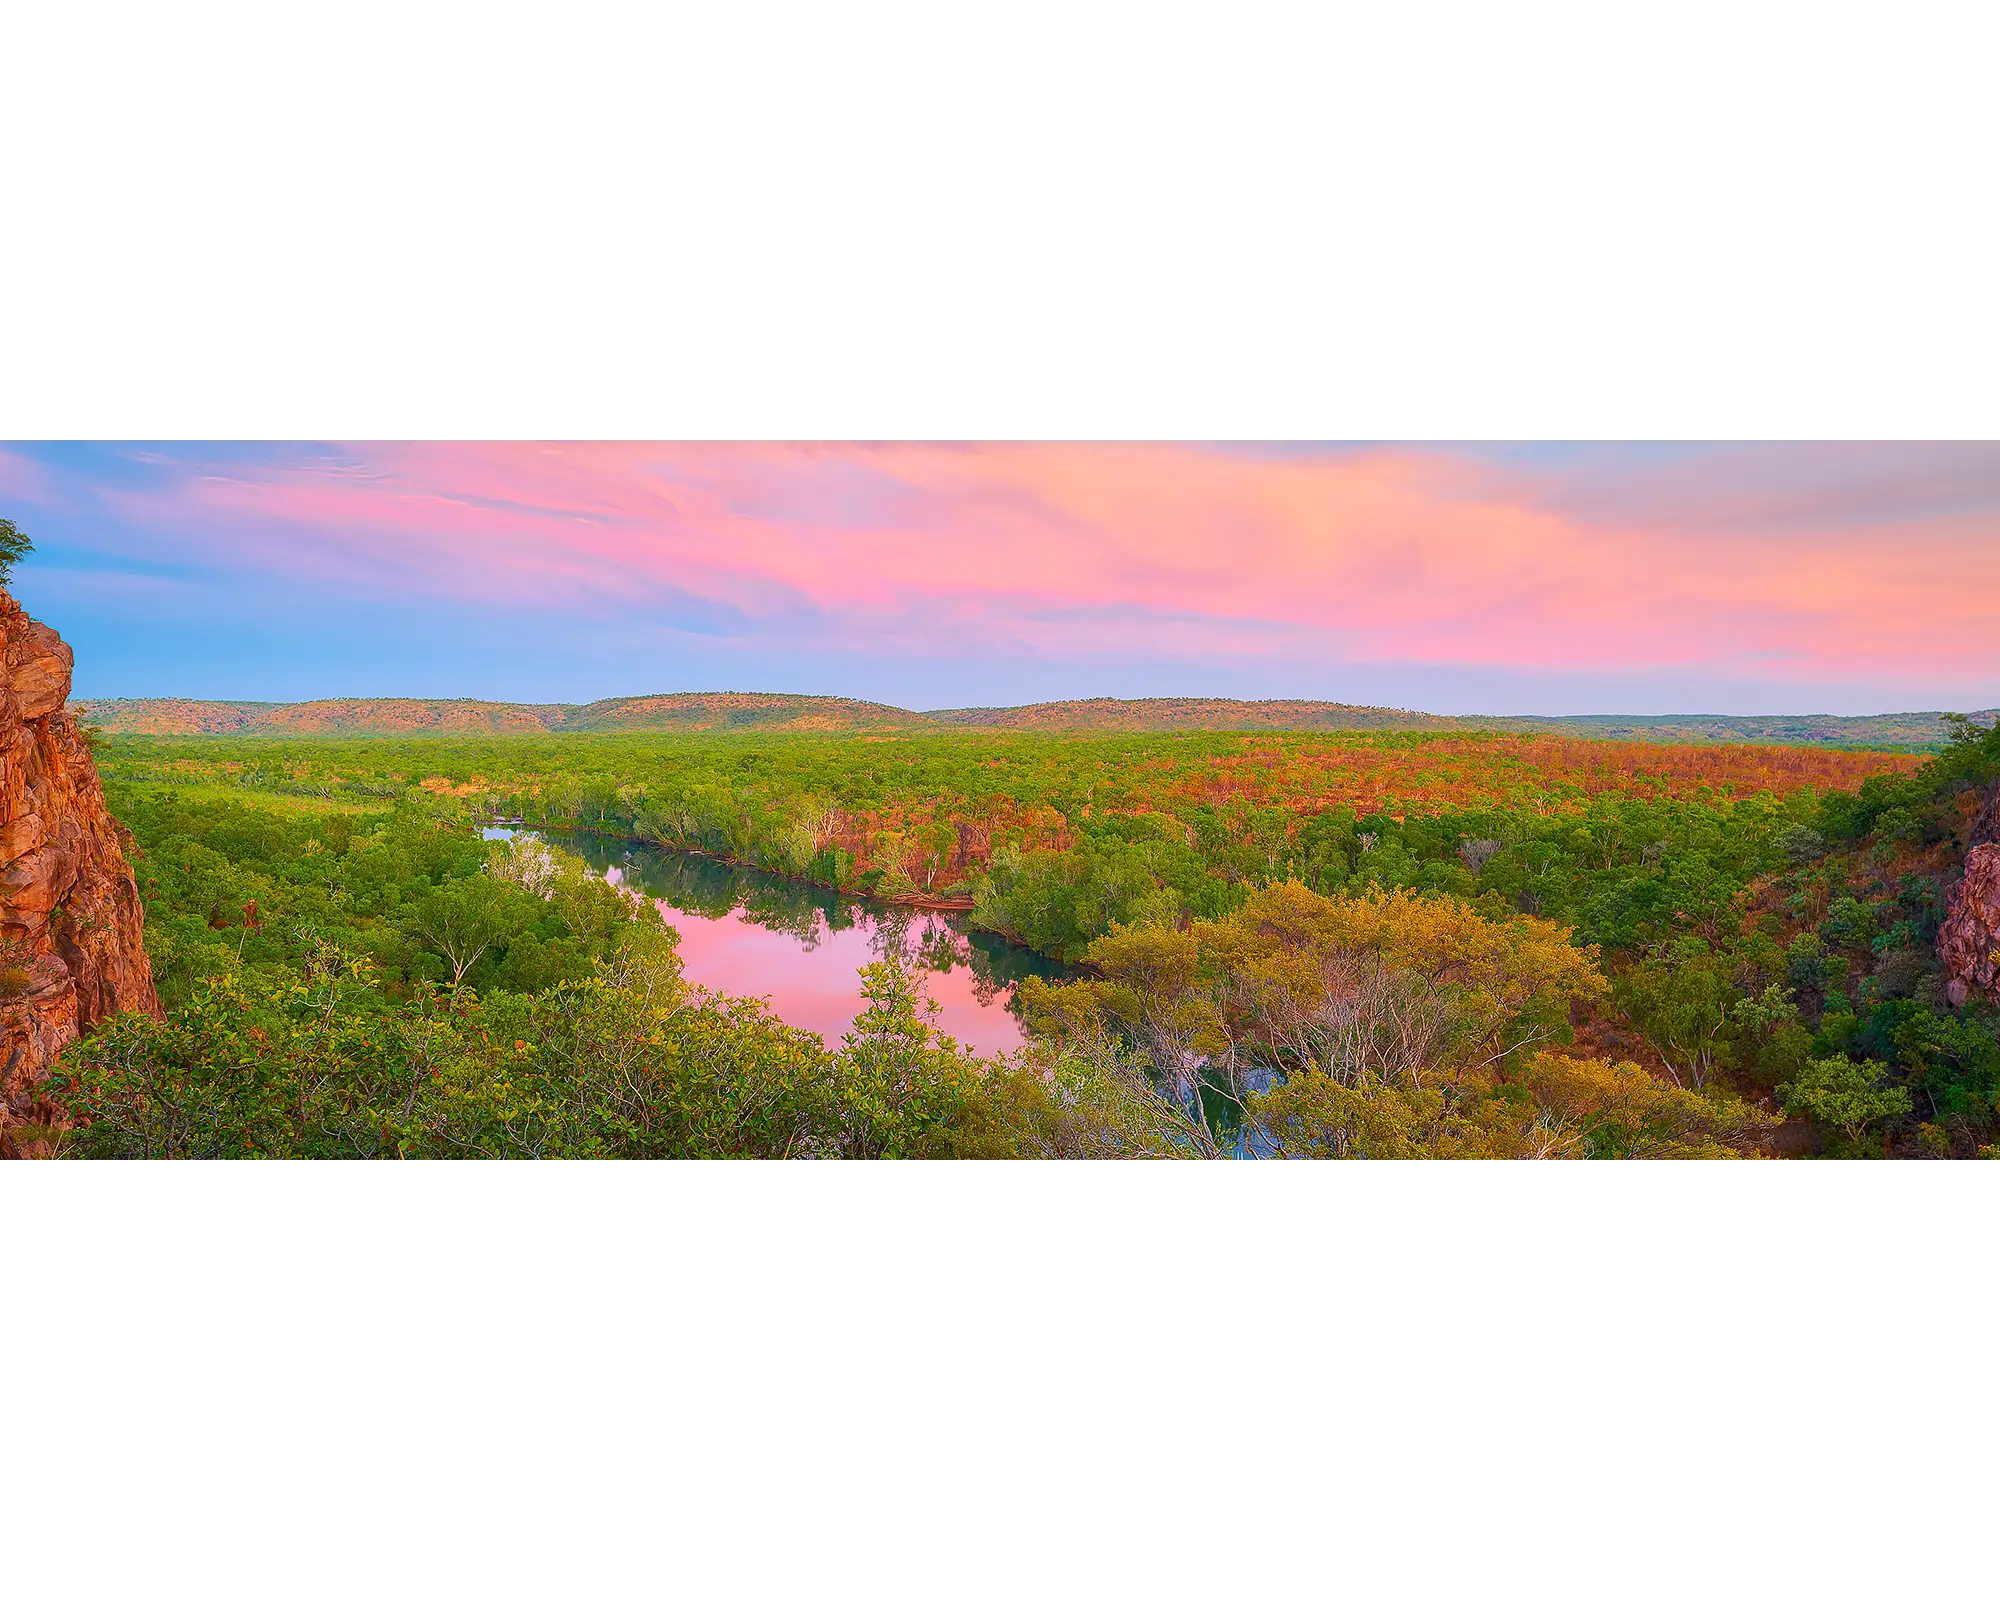 Sunrise over Katherine River, Nitmiluk National Park, NT.